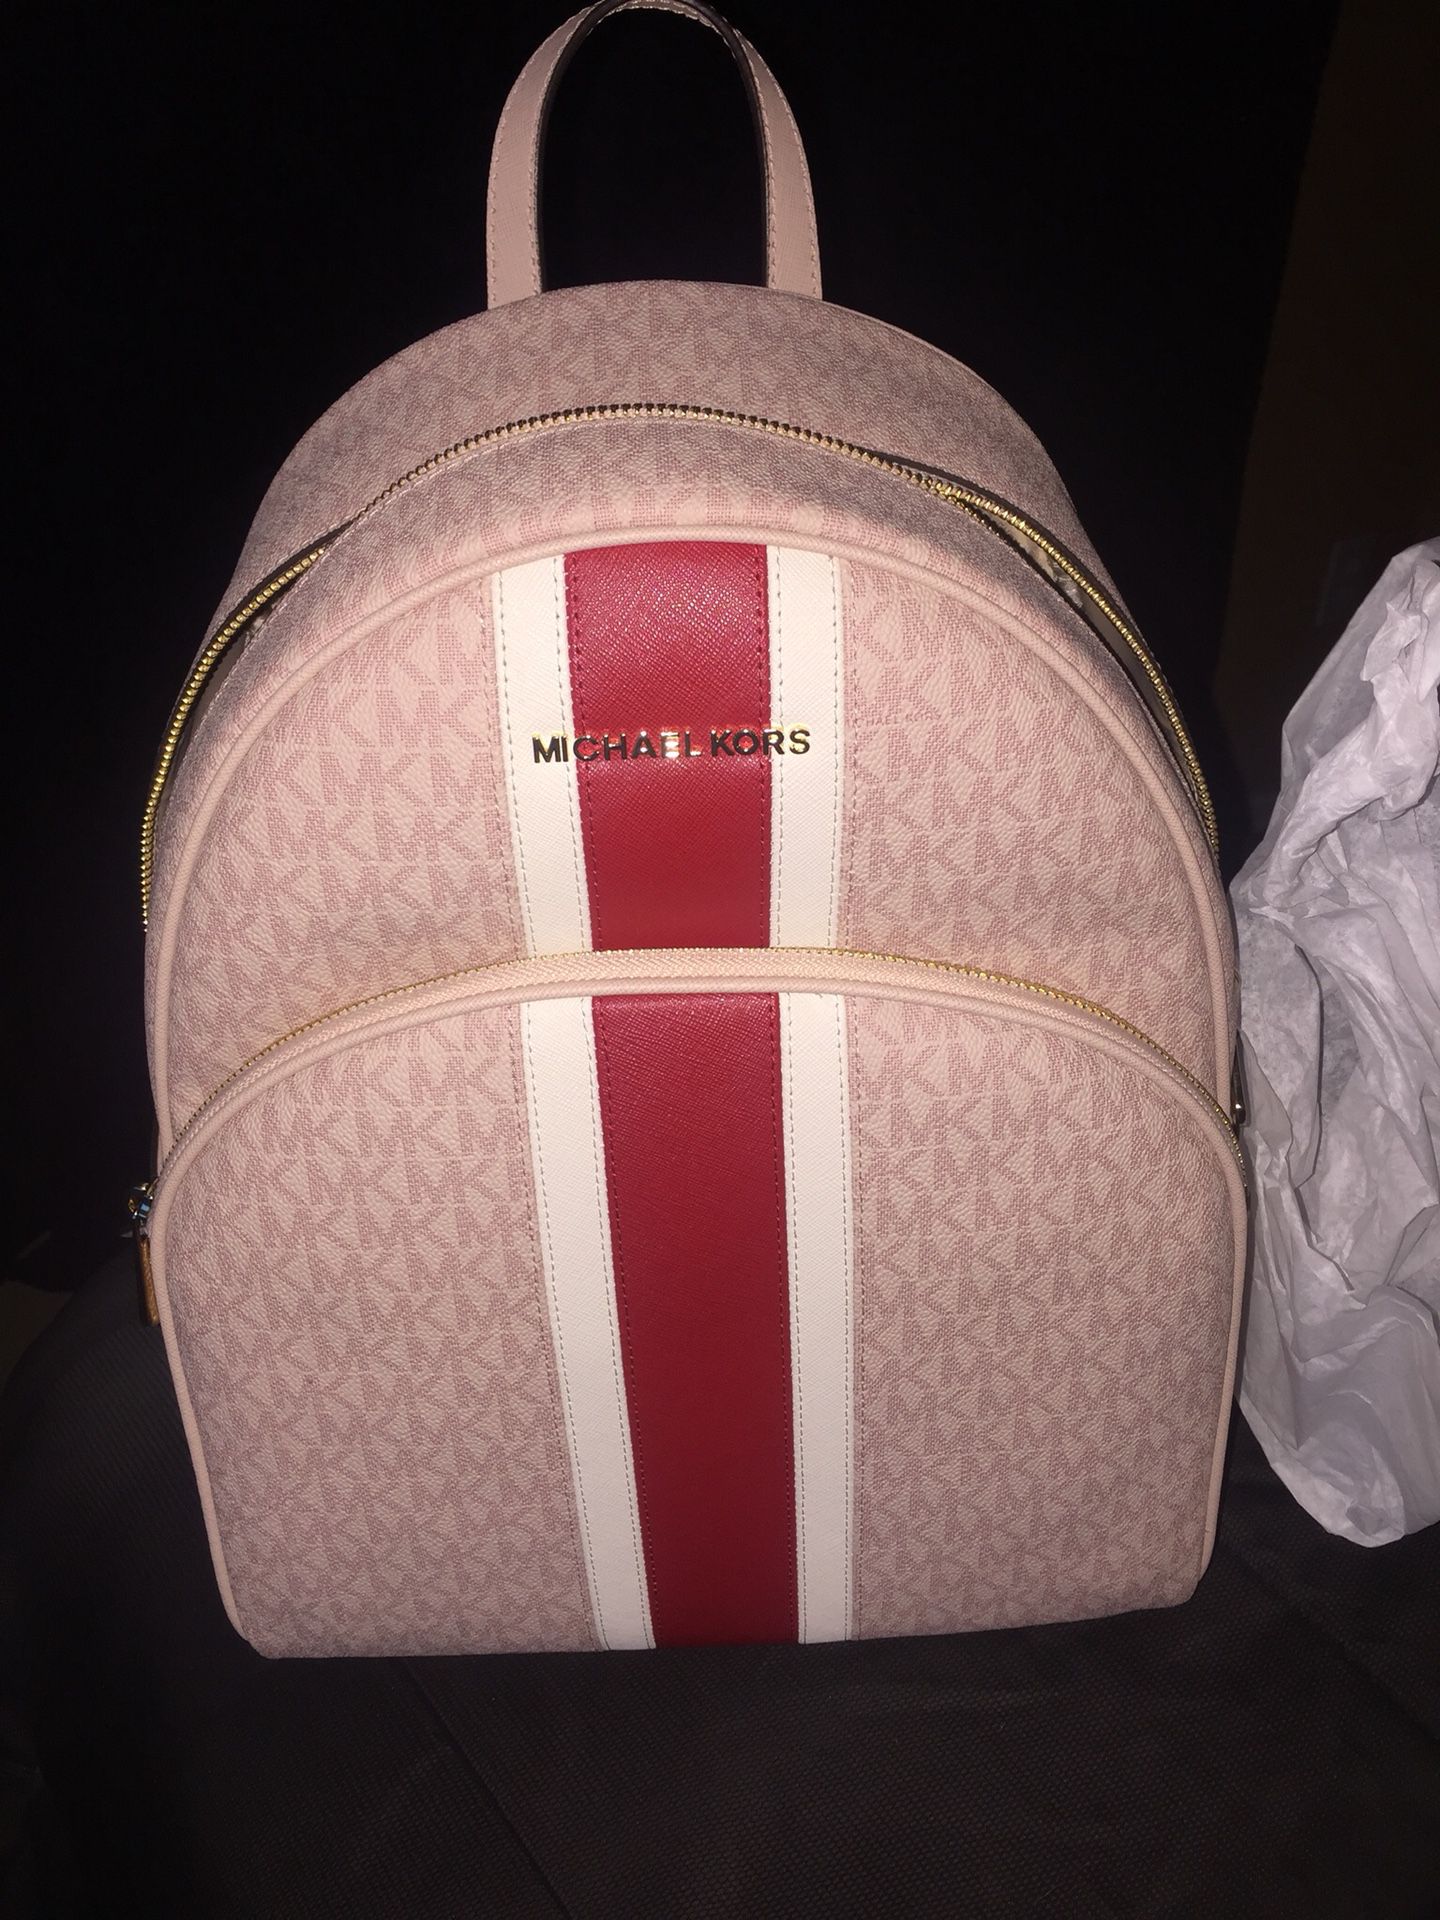 MK pink Backpack